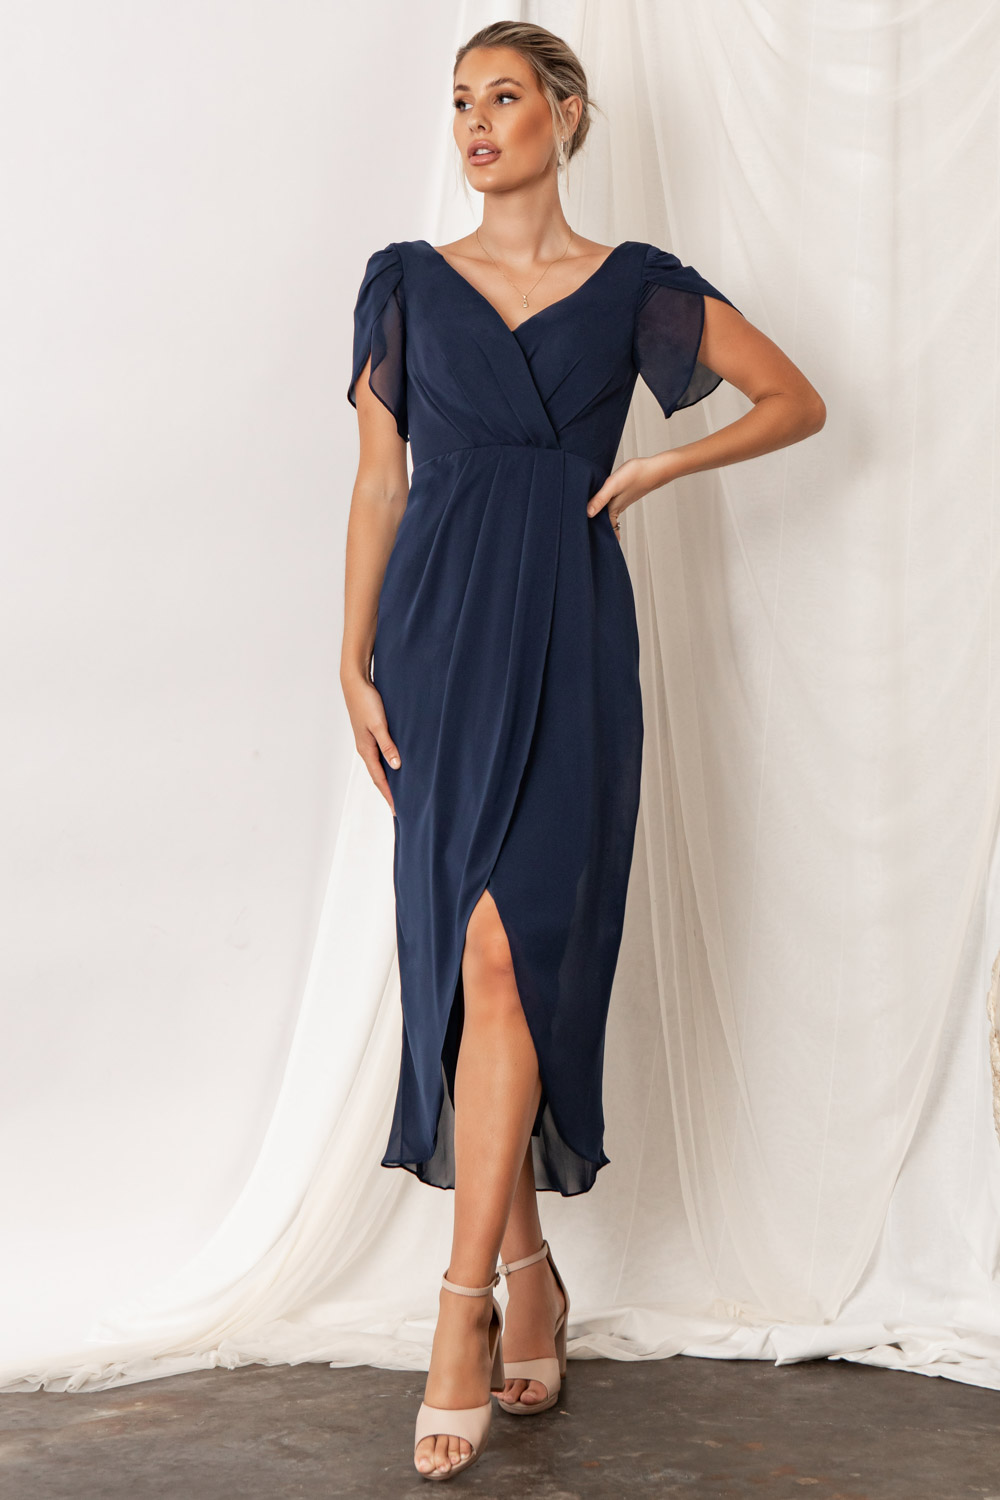 Zara - Navy Blue Bridesmaids Dress ...